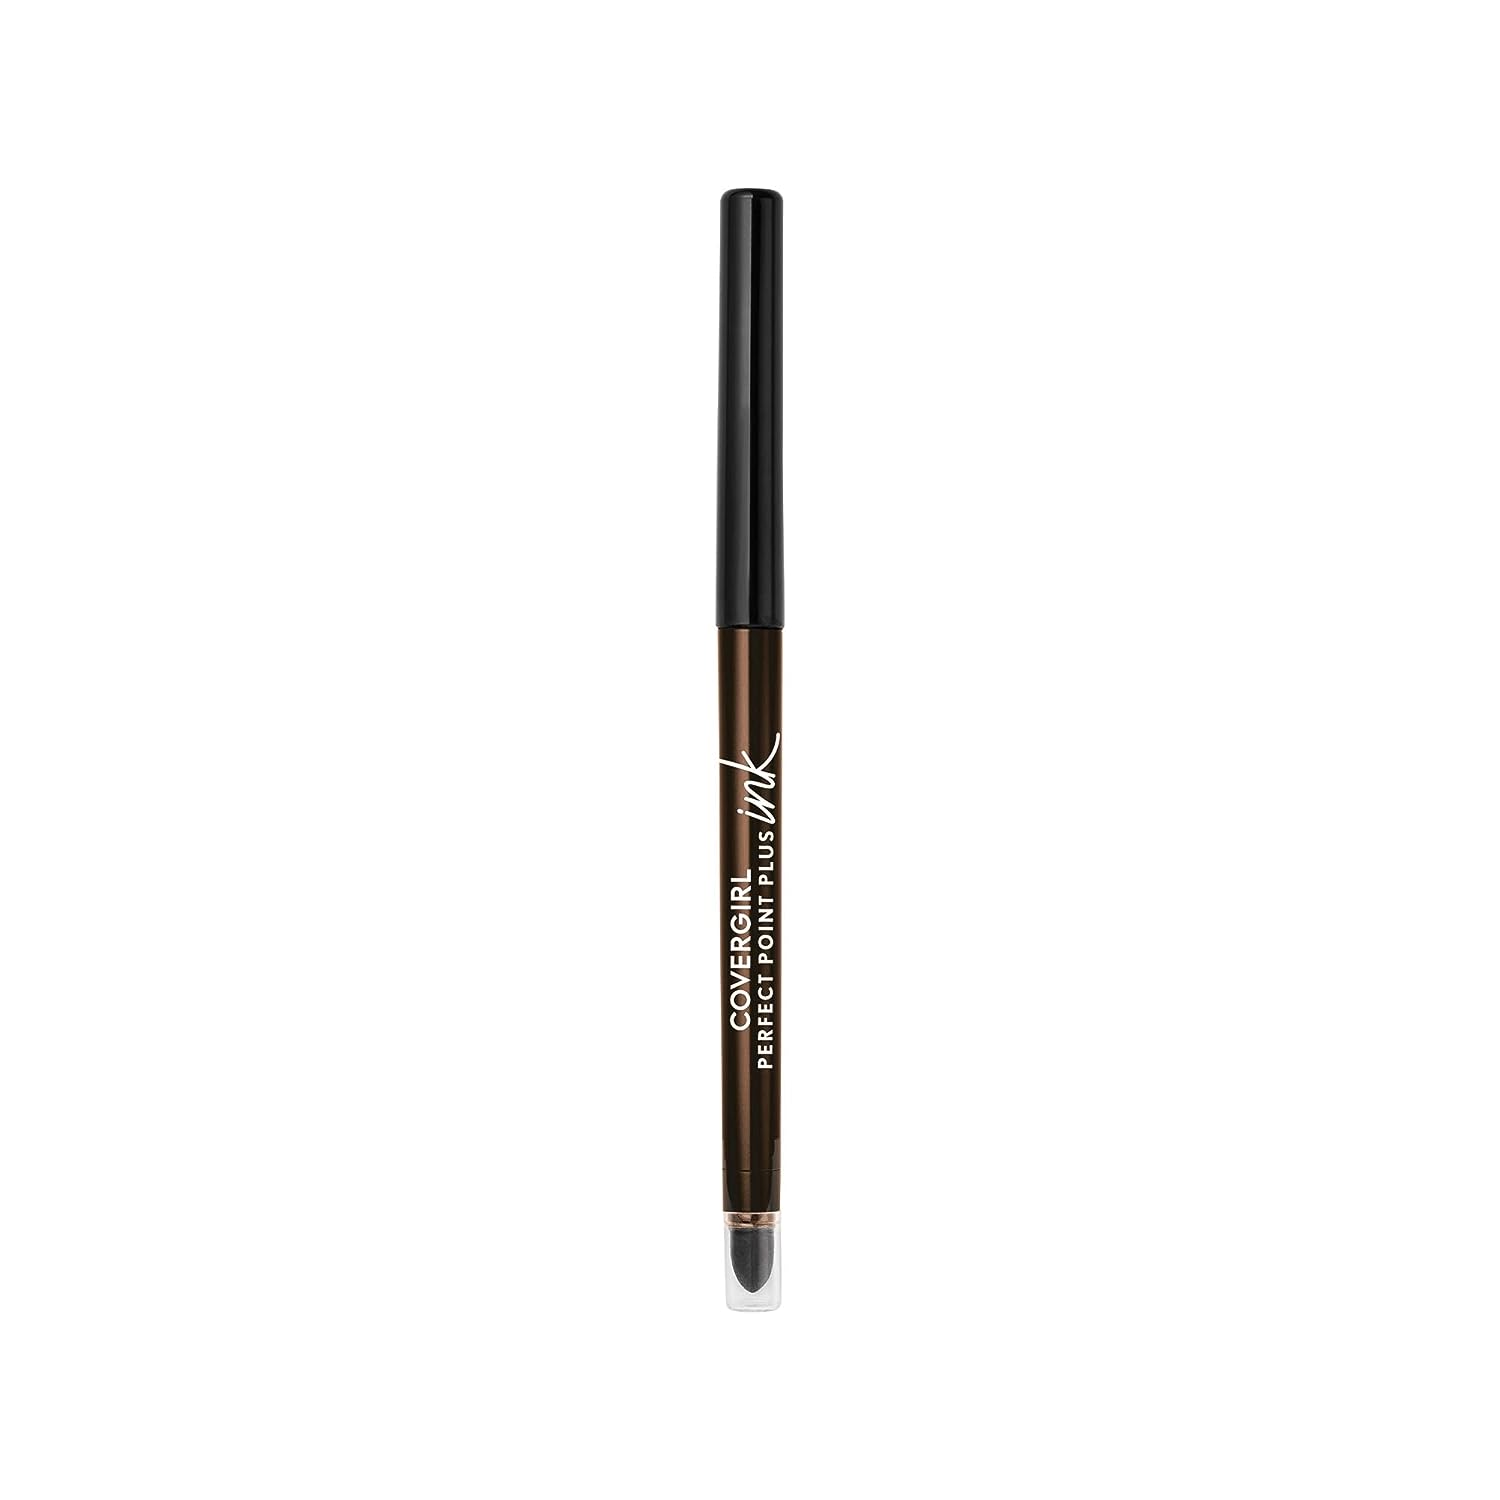 COVERGIRL Perfect Point Plus Ink Gel Eye Pencil, Pigmented, Long-Wearing, Vegan Formula, Shimmering Brown 280, 0.01